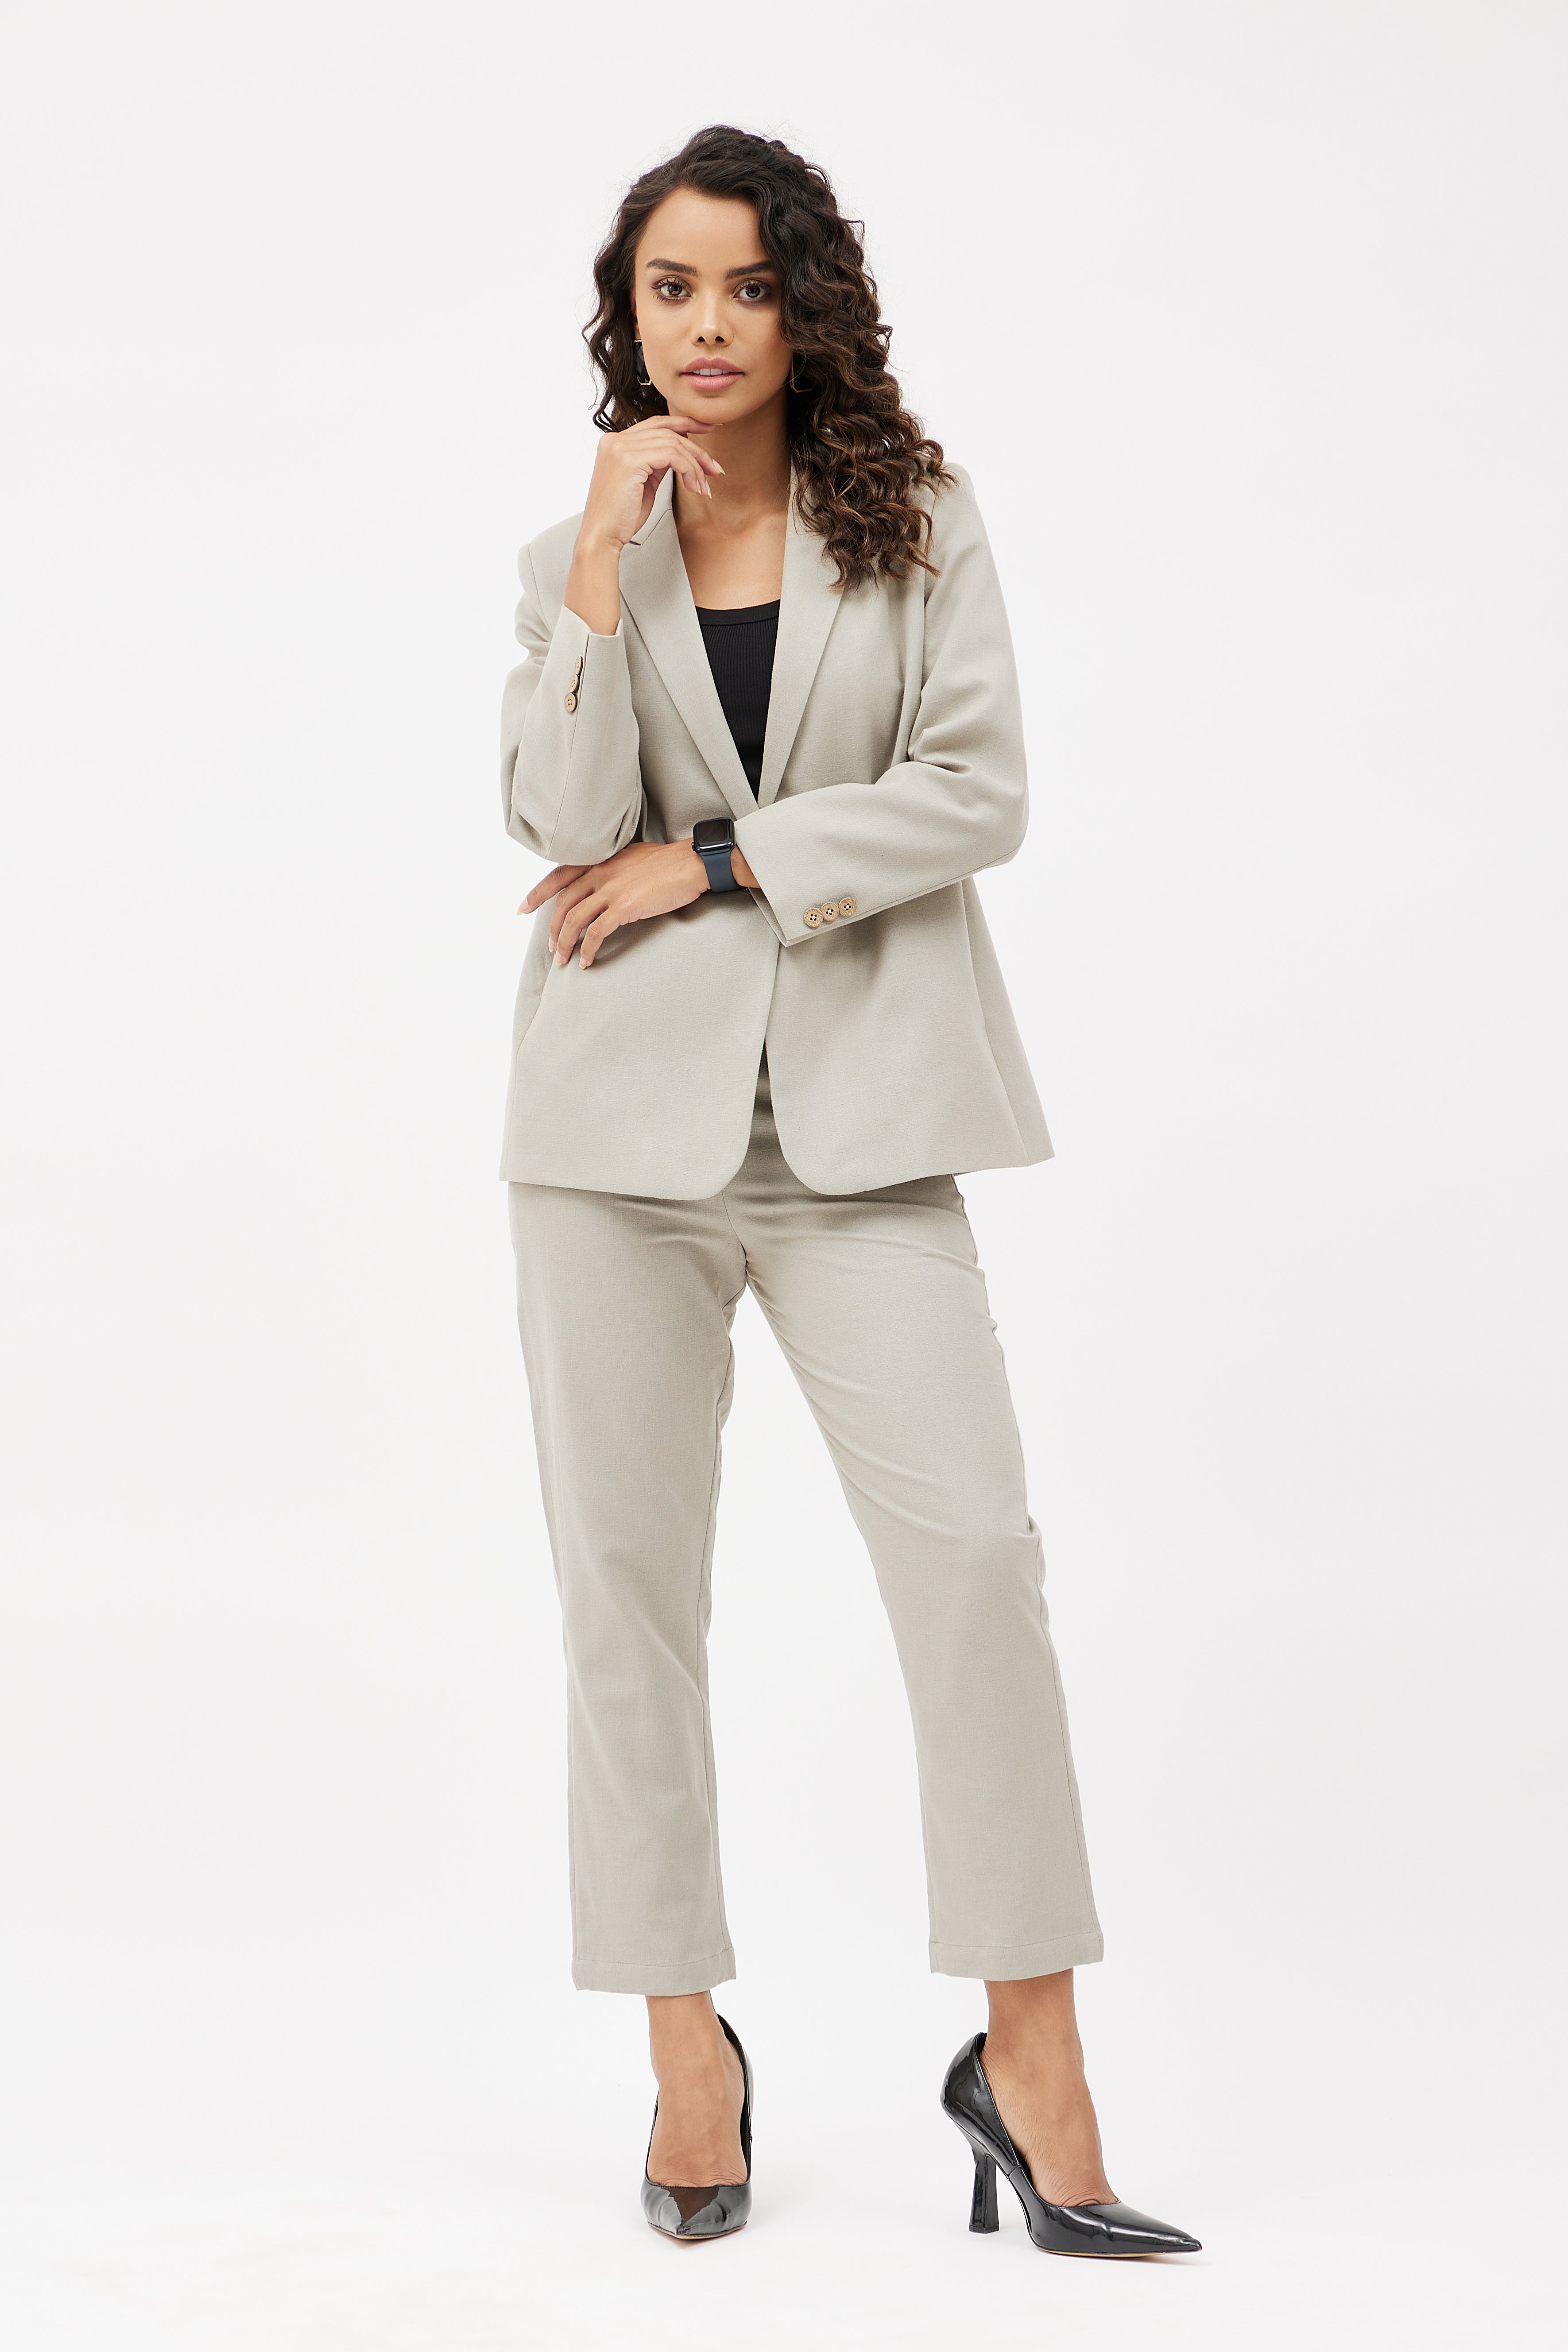 Online Shop Formal Uniform Design Female Office Suits Jackets And Pants For  Business Women Office Ladies Work   Work trousers women Women office  Trousers women